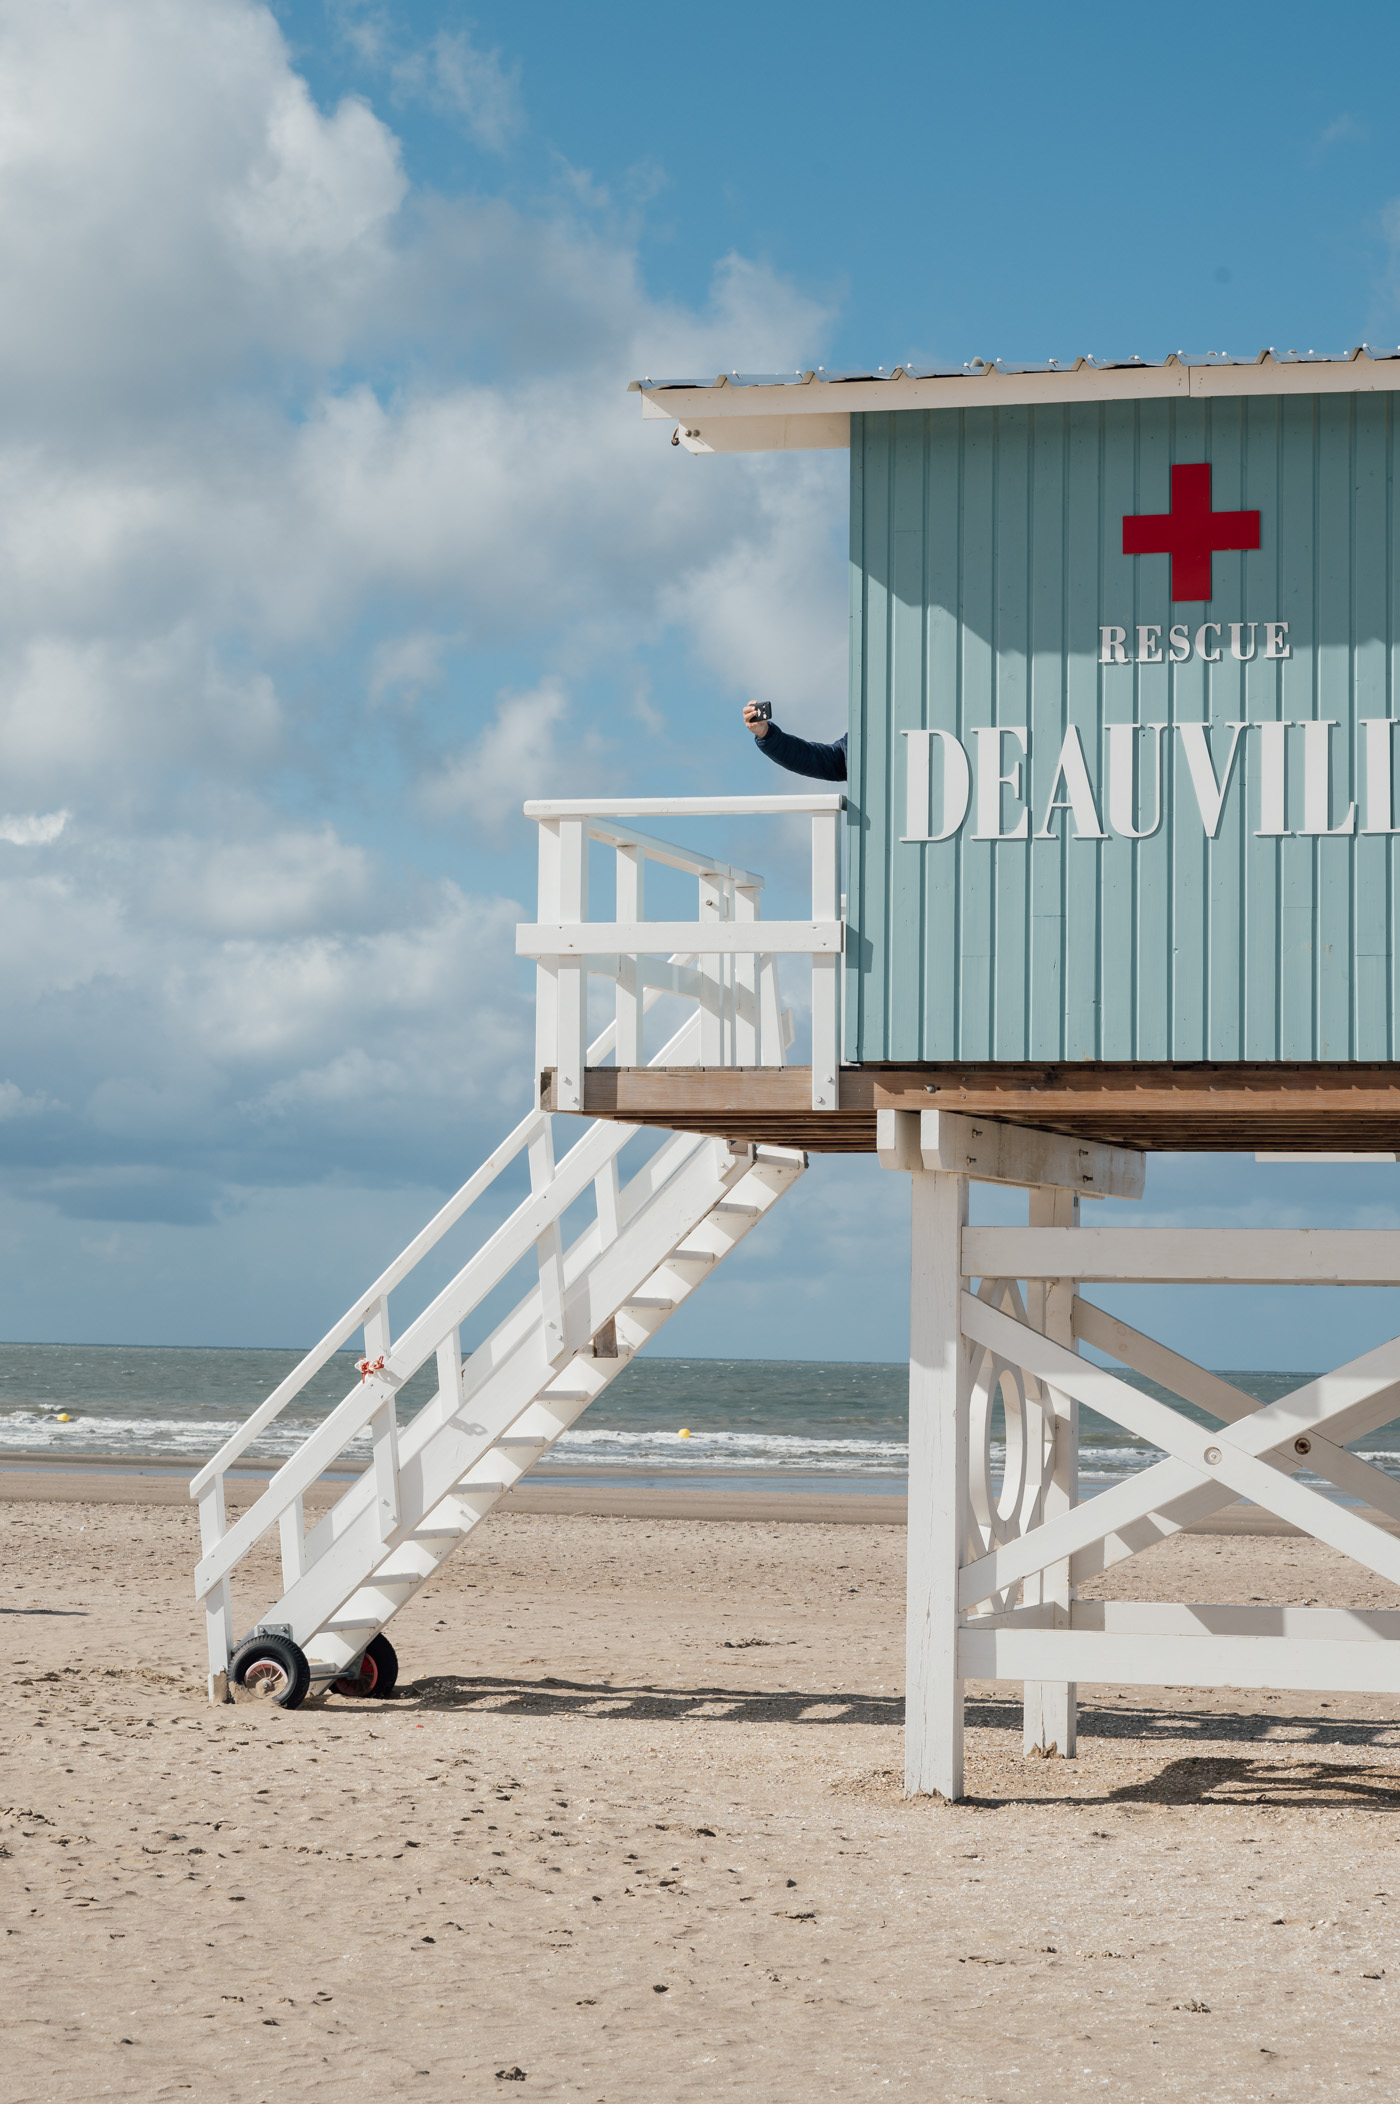 Deauville beach lookout tower